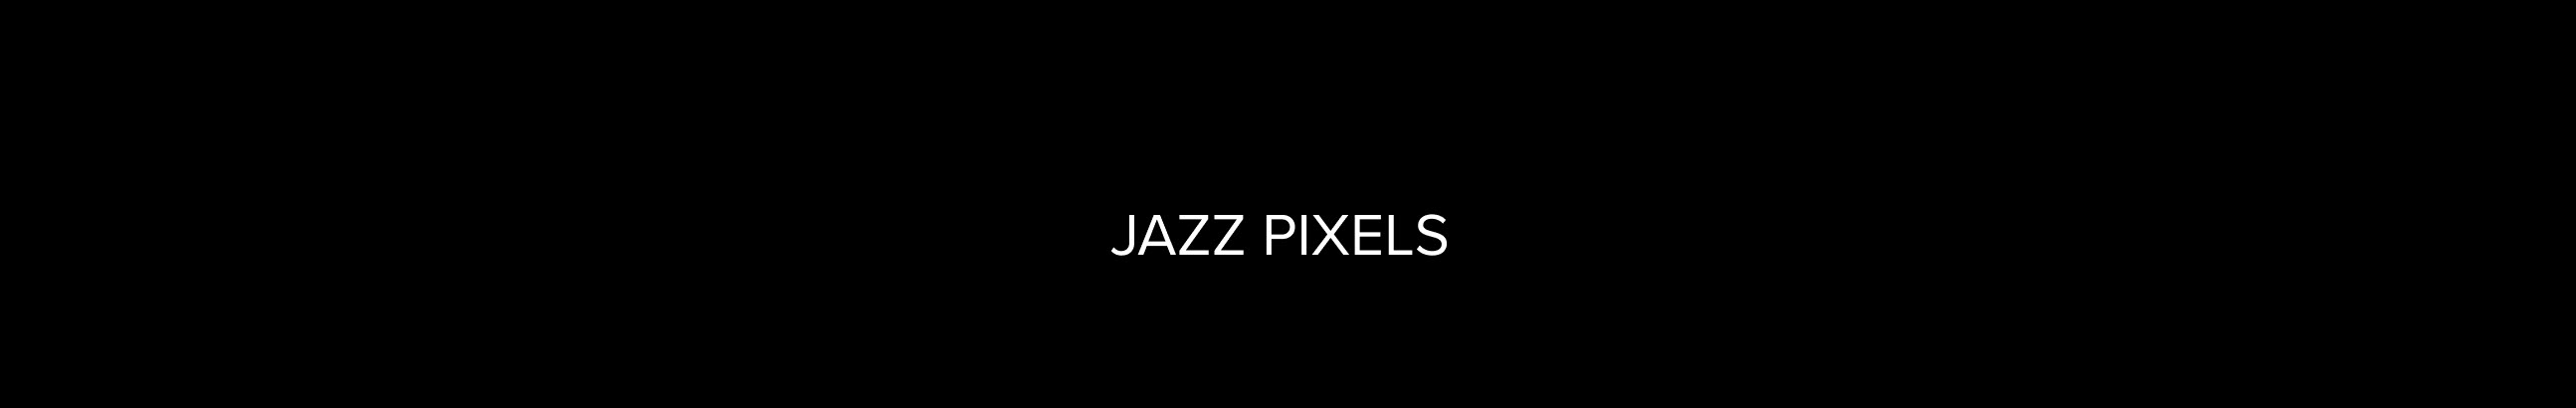 Jazz Pixels's profile banner